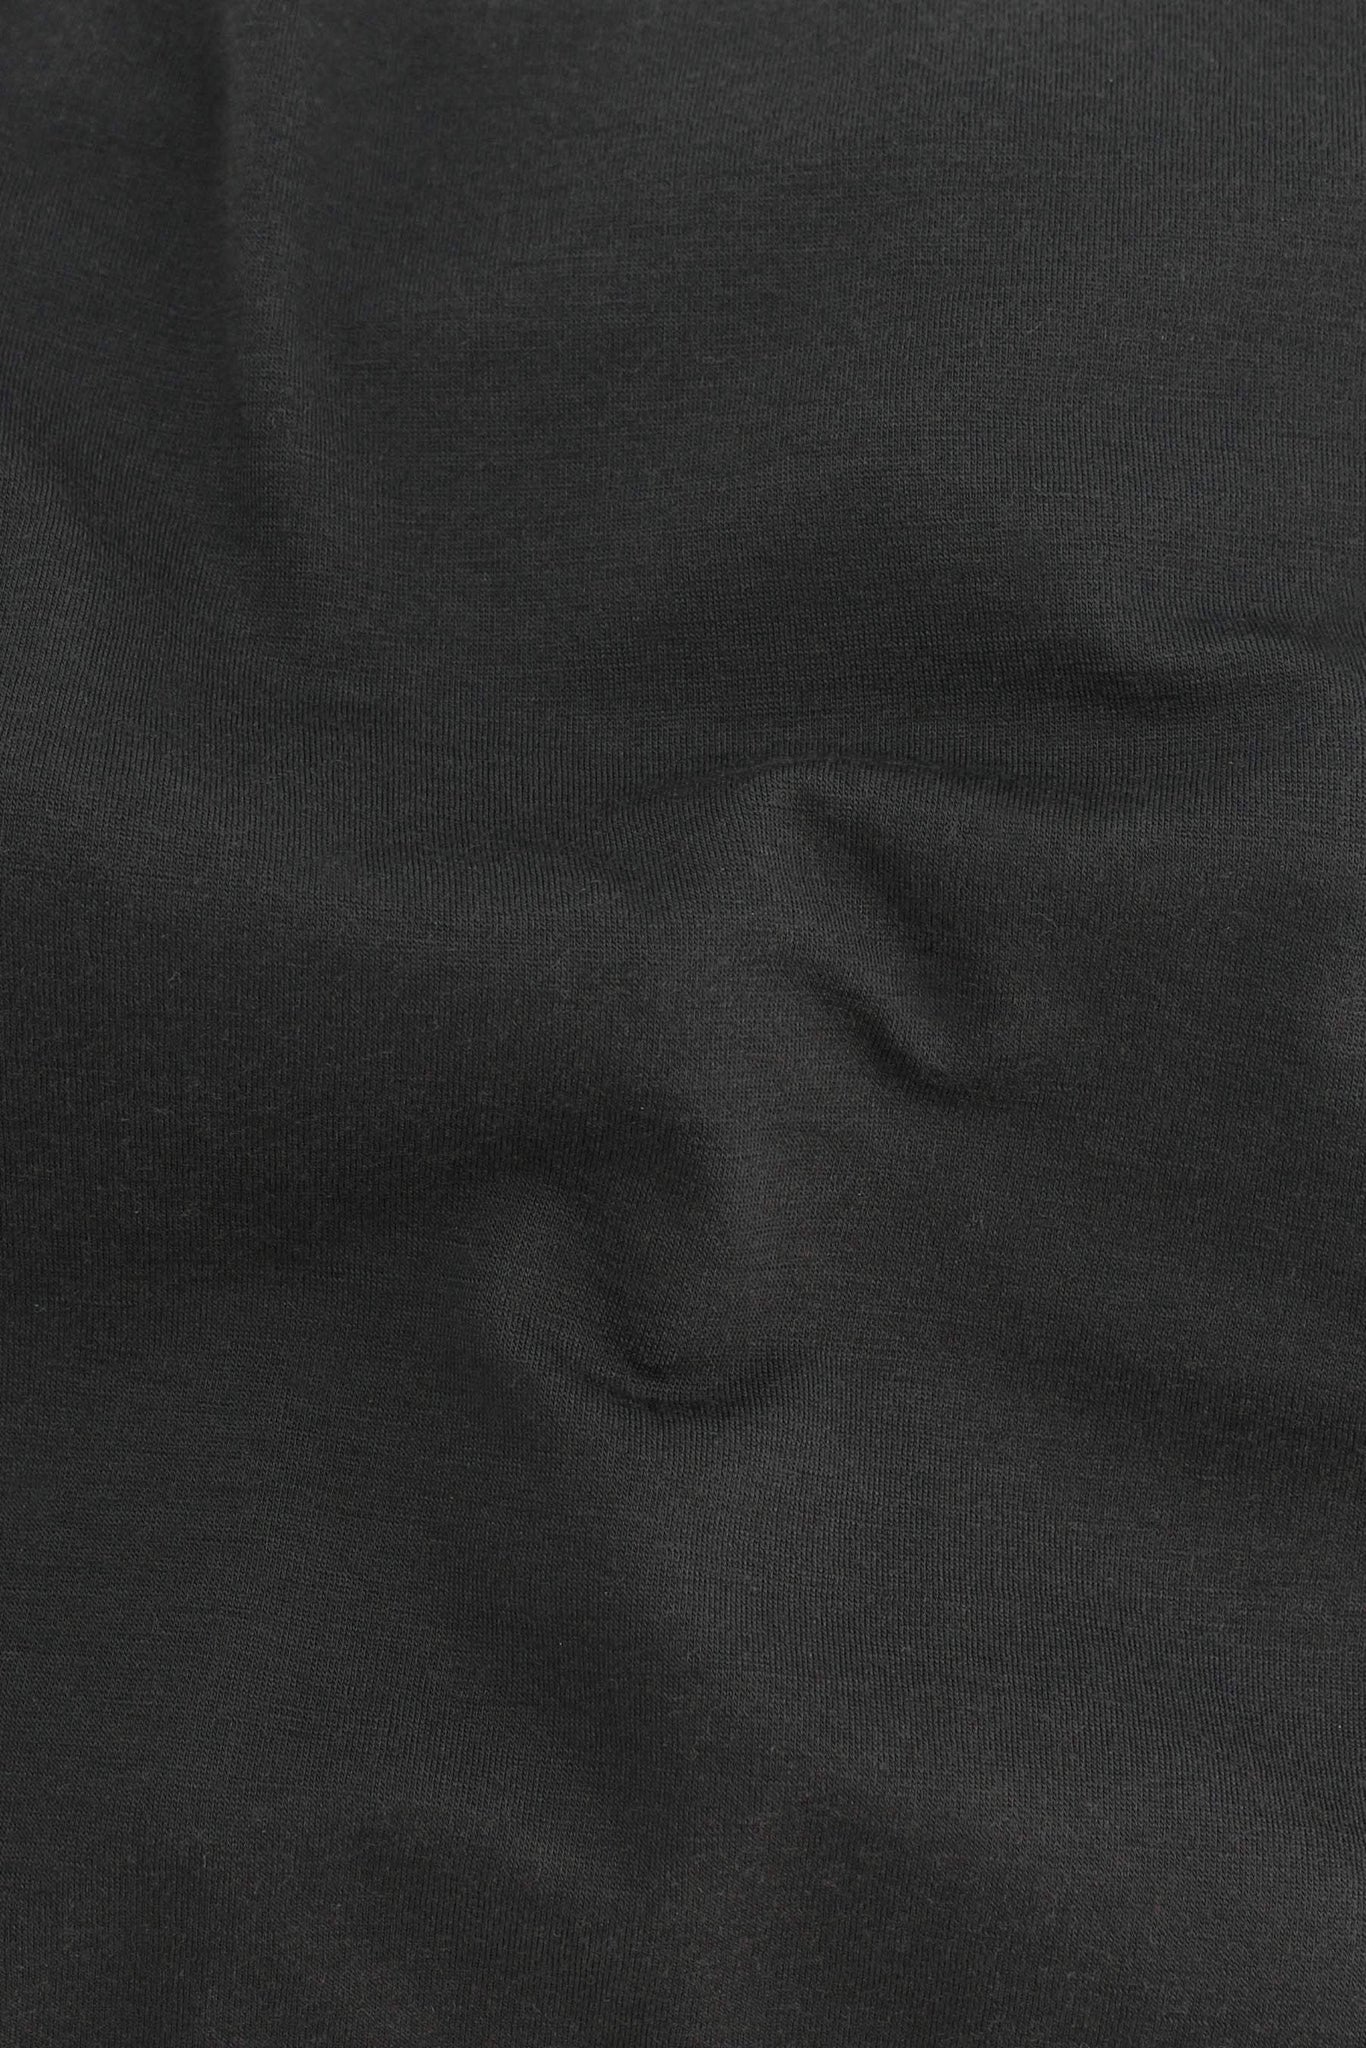 Merino Wool Jersey Charcoal